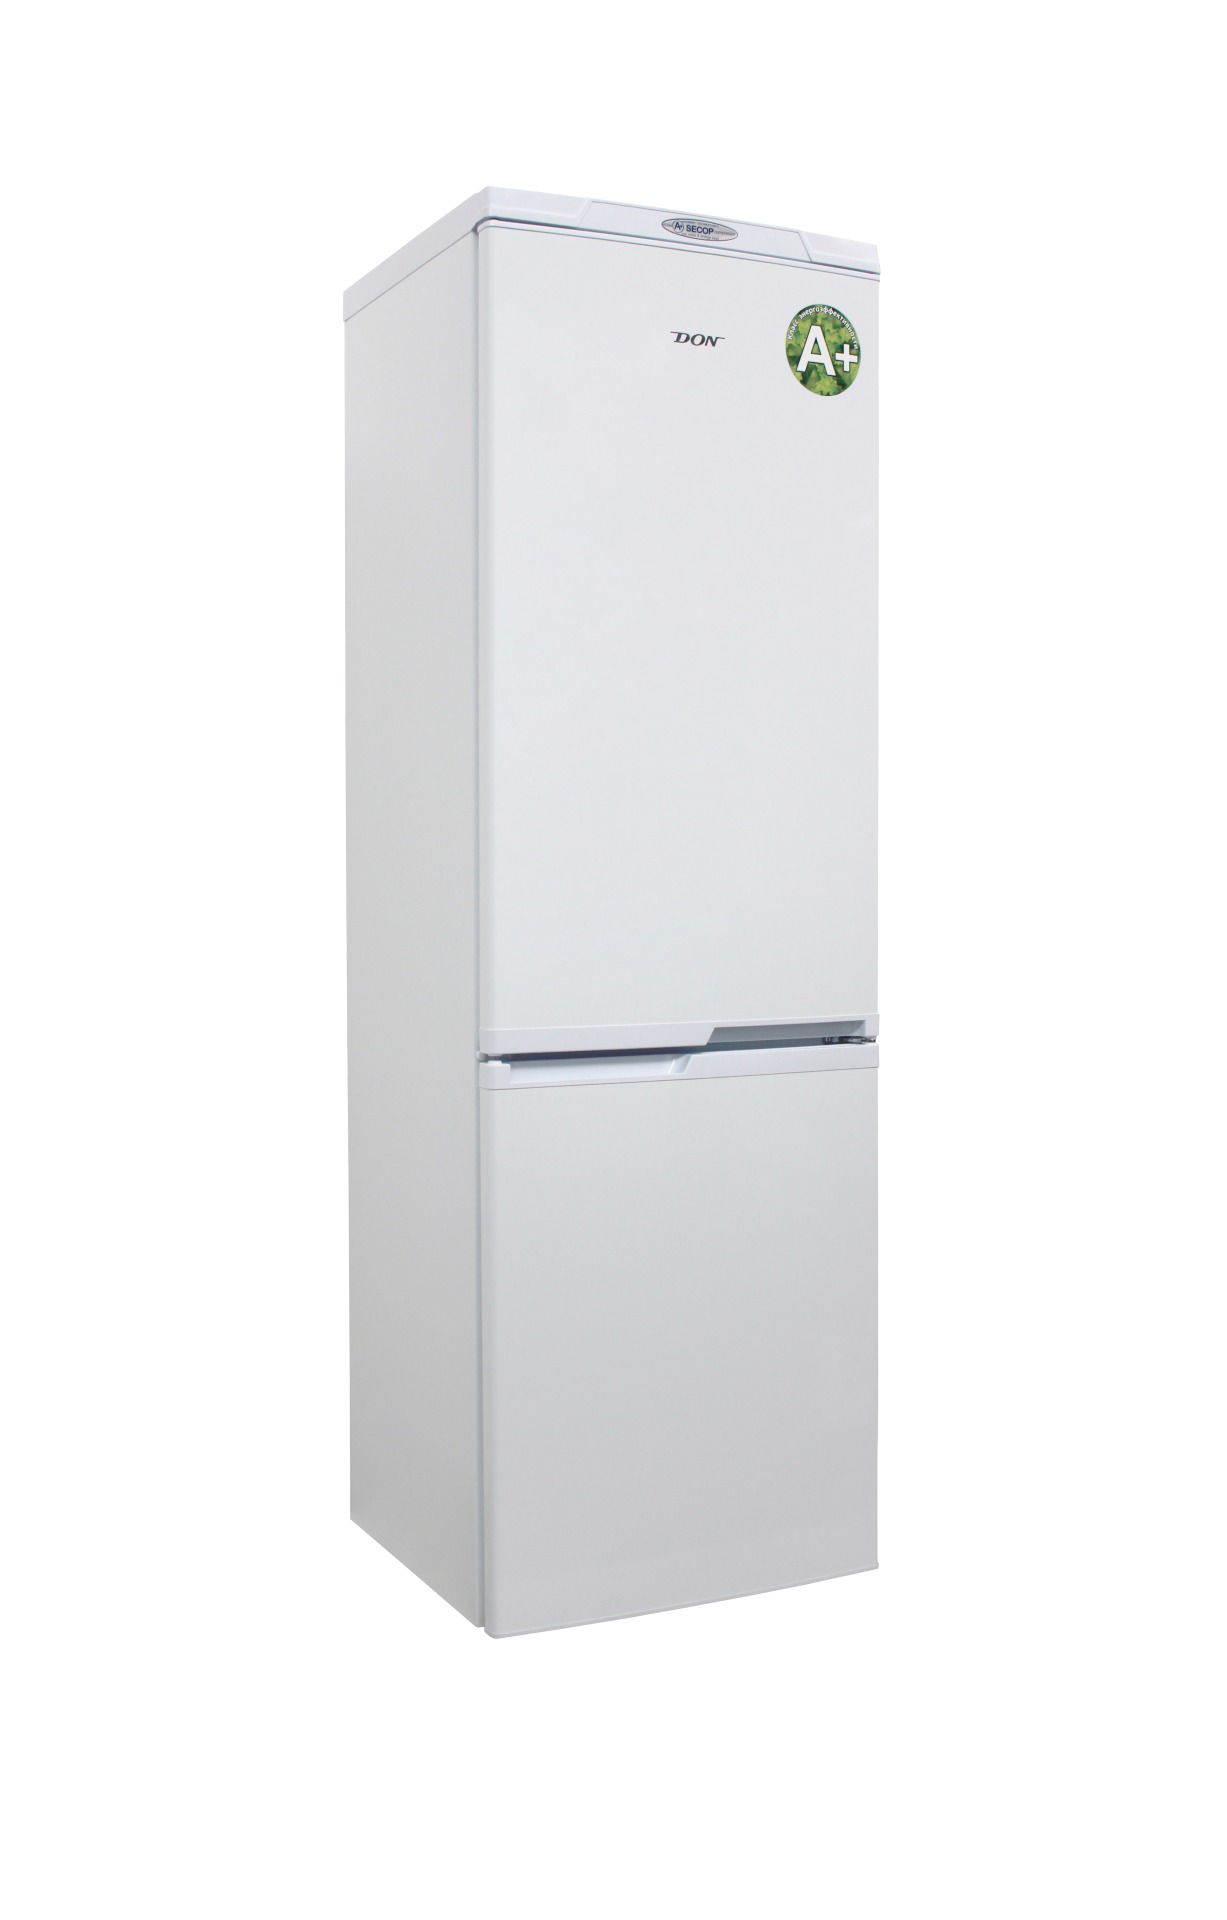 Холодильник DON R-291 B класс А+ объем хол/мор 326л/225л58 см х 181 см х 61 см